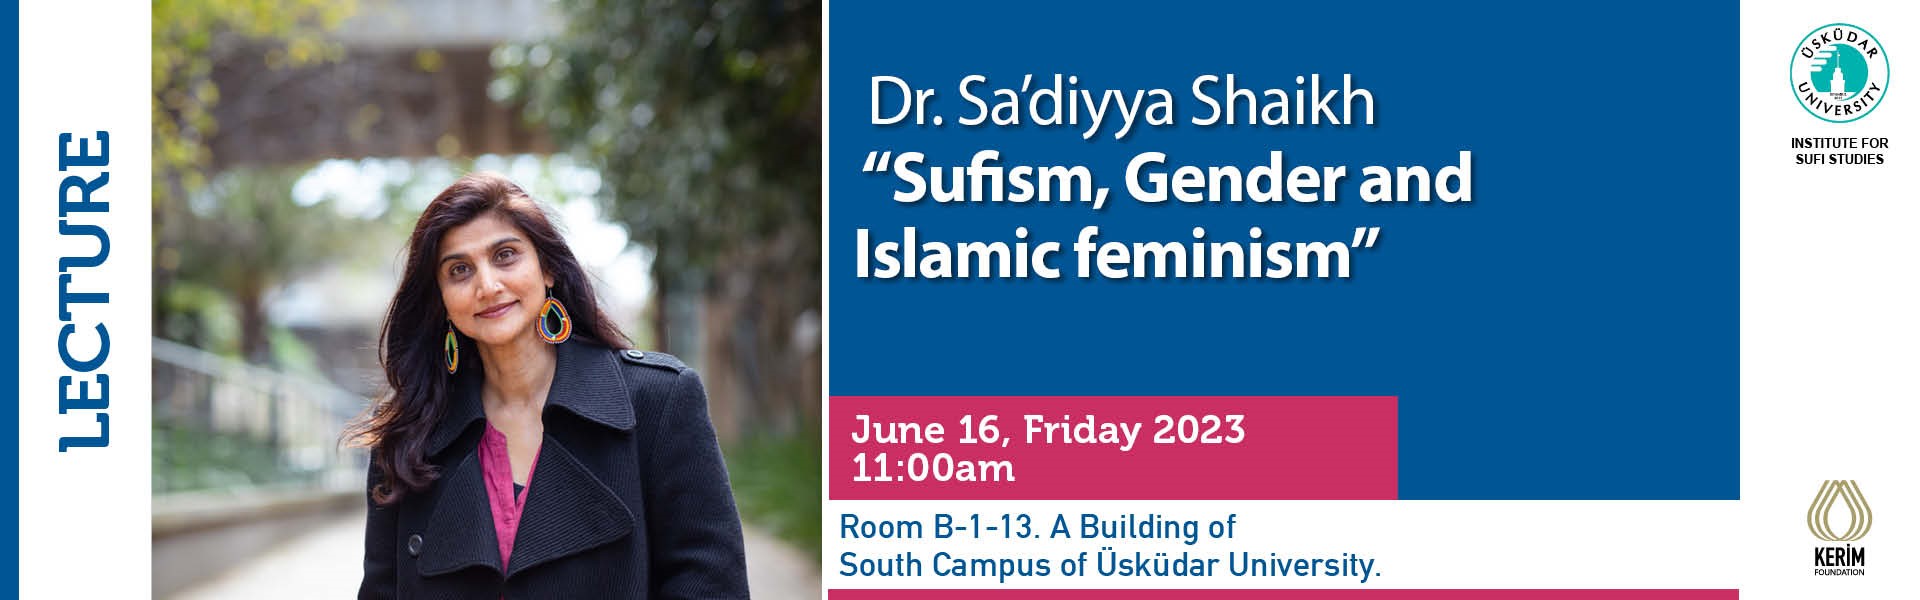 SUFISM, GENDER AND ISLAMIC FEMINISM